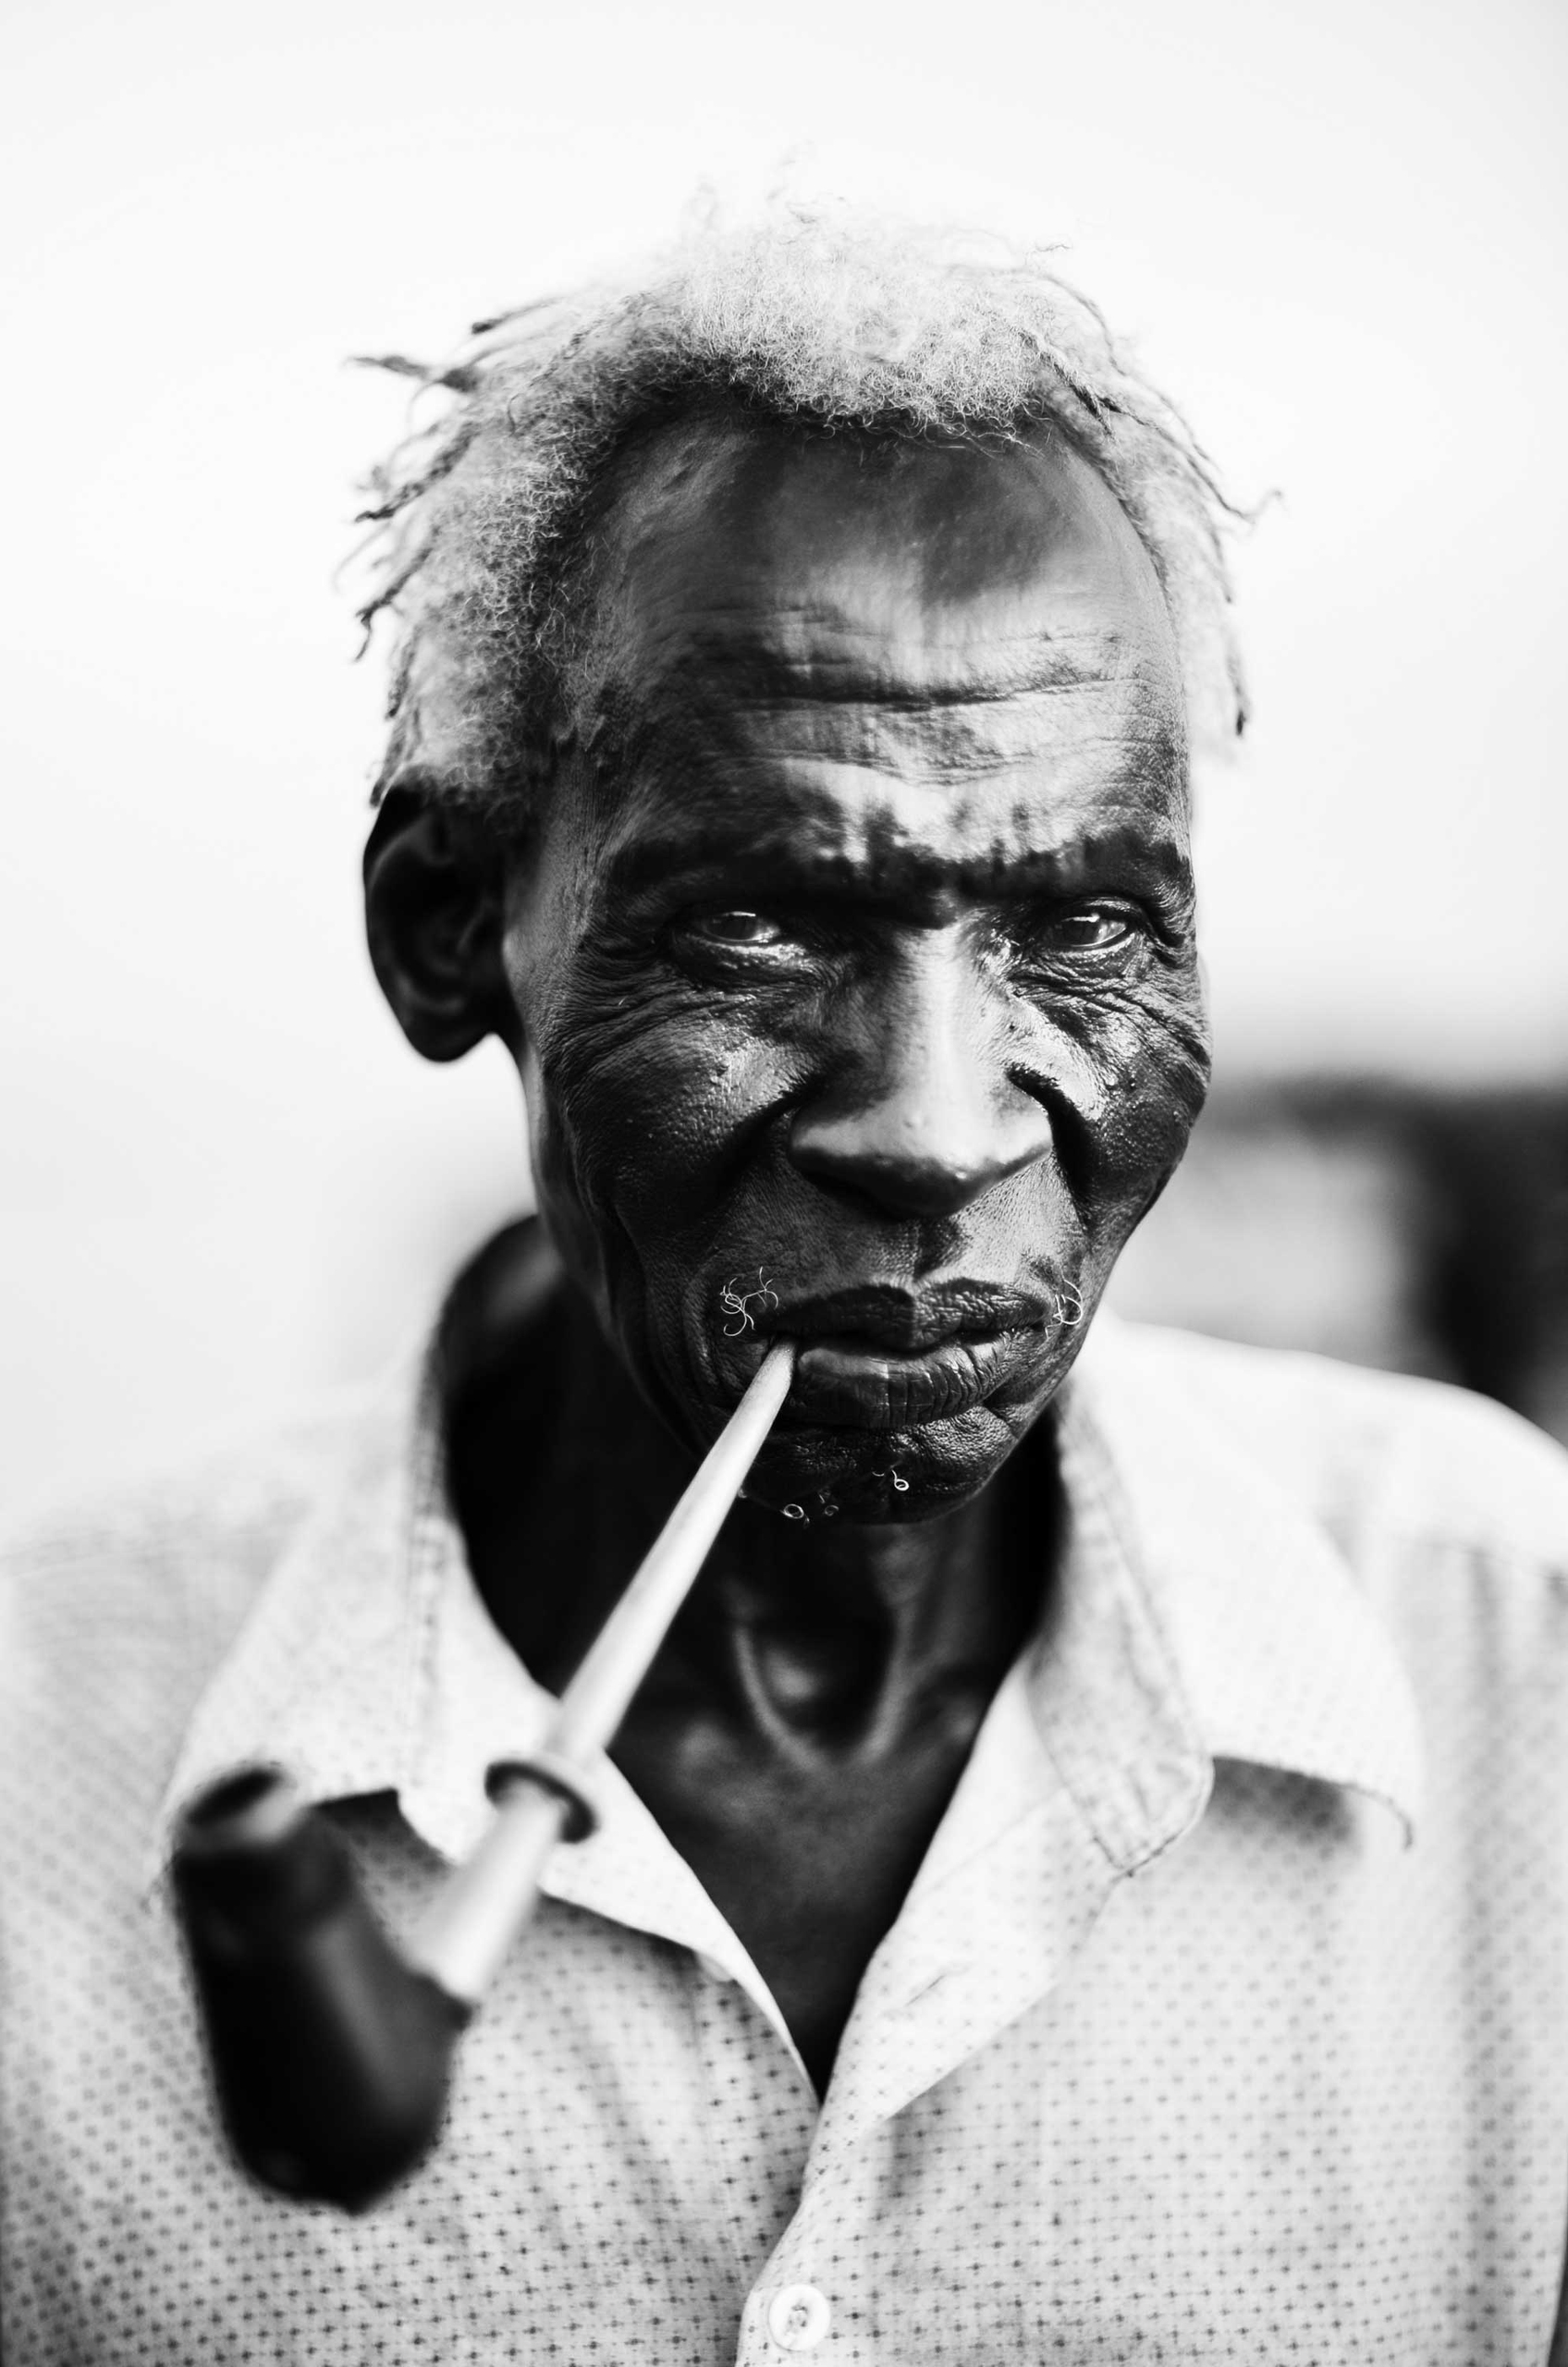 ugo-borga-south-soudan-portraits-2016-black-and-white-02